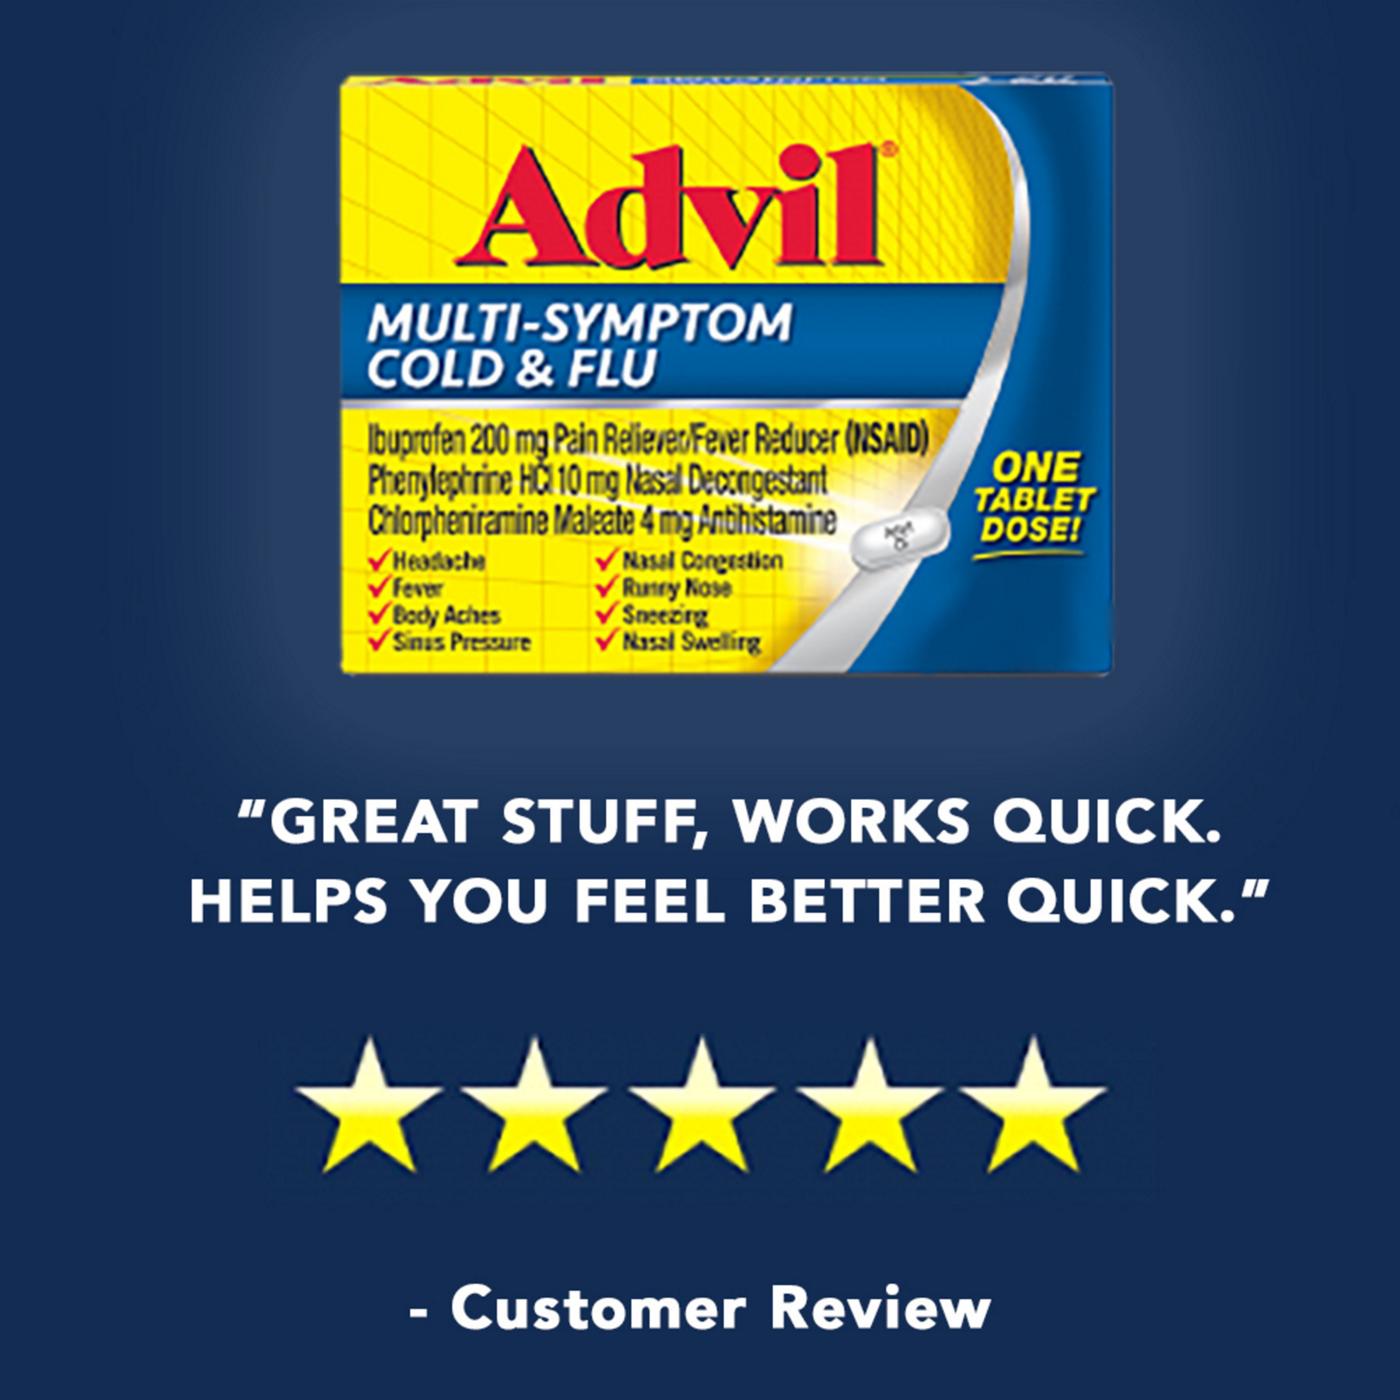 Advil Multi-Symptom Cold and Flu Coated Tablet; image 7 of 7